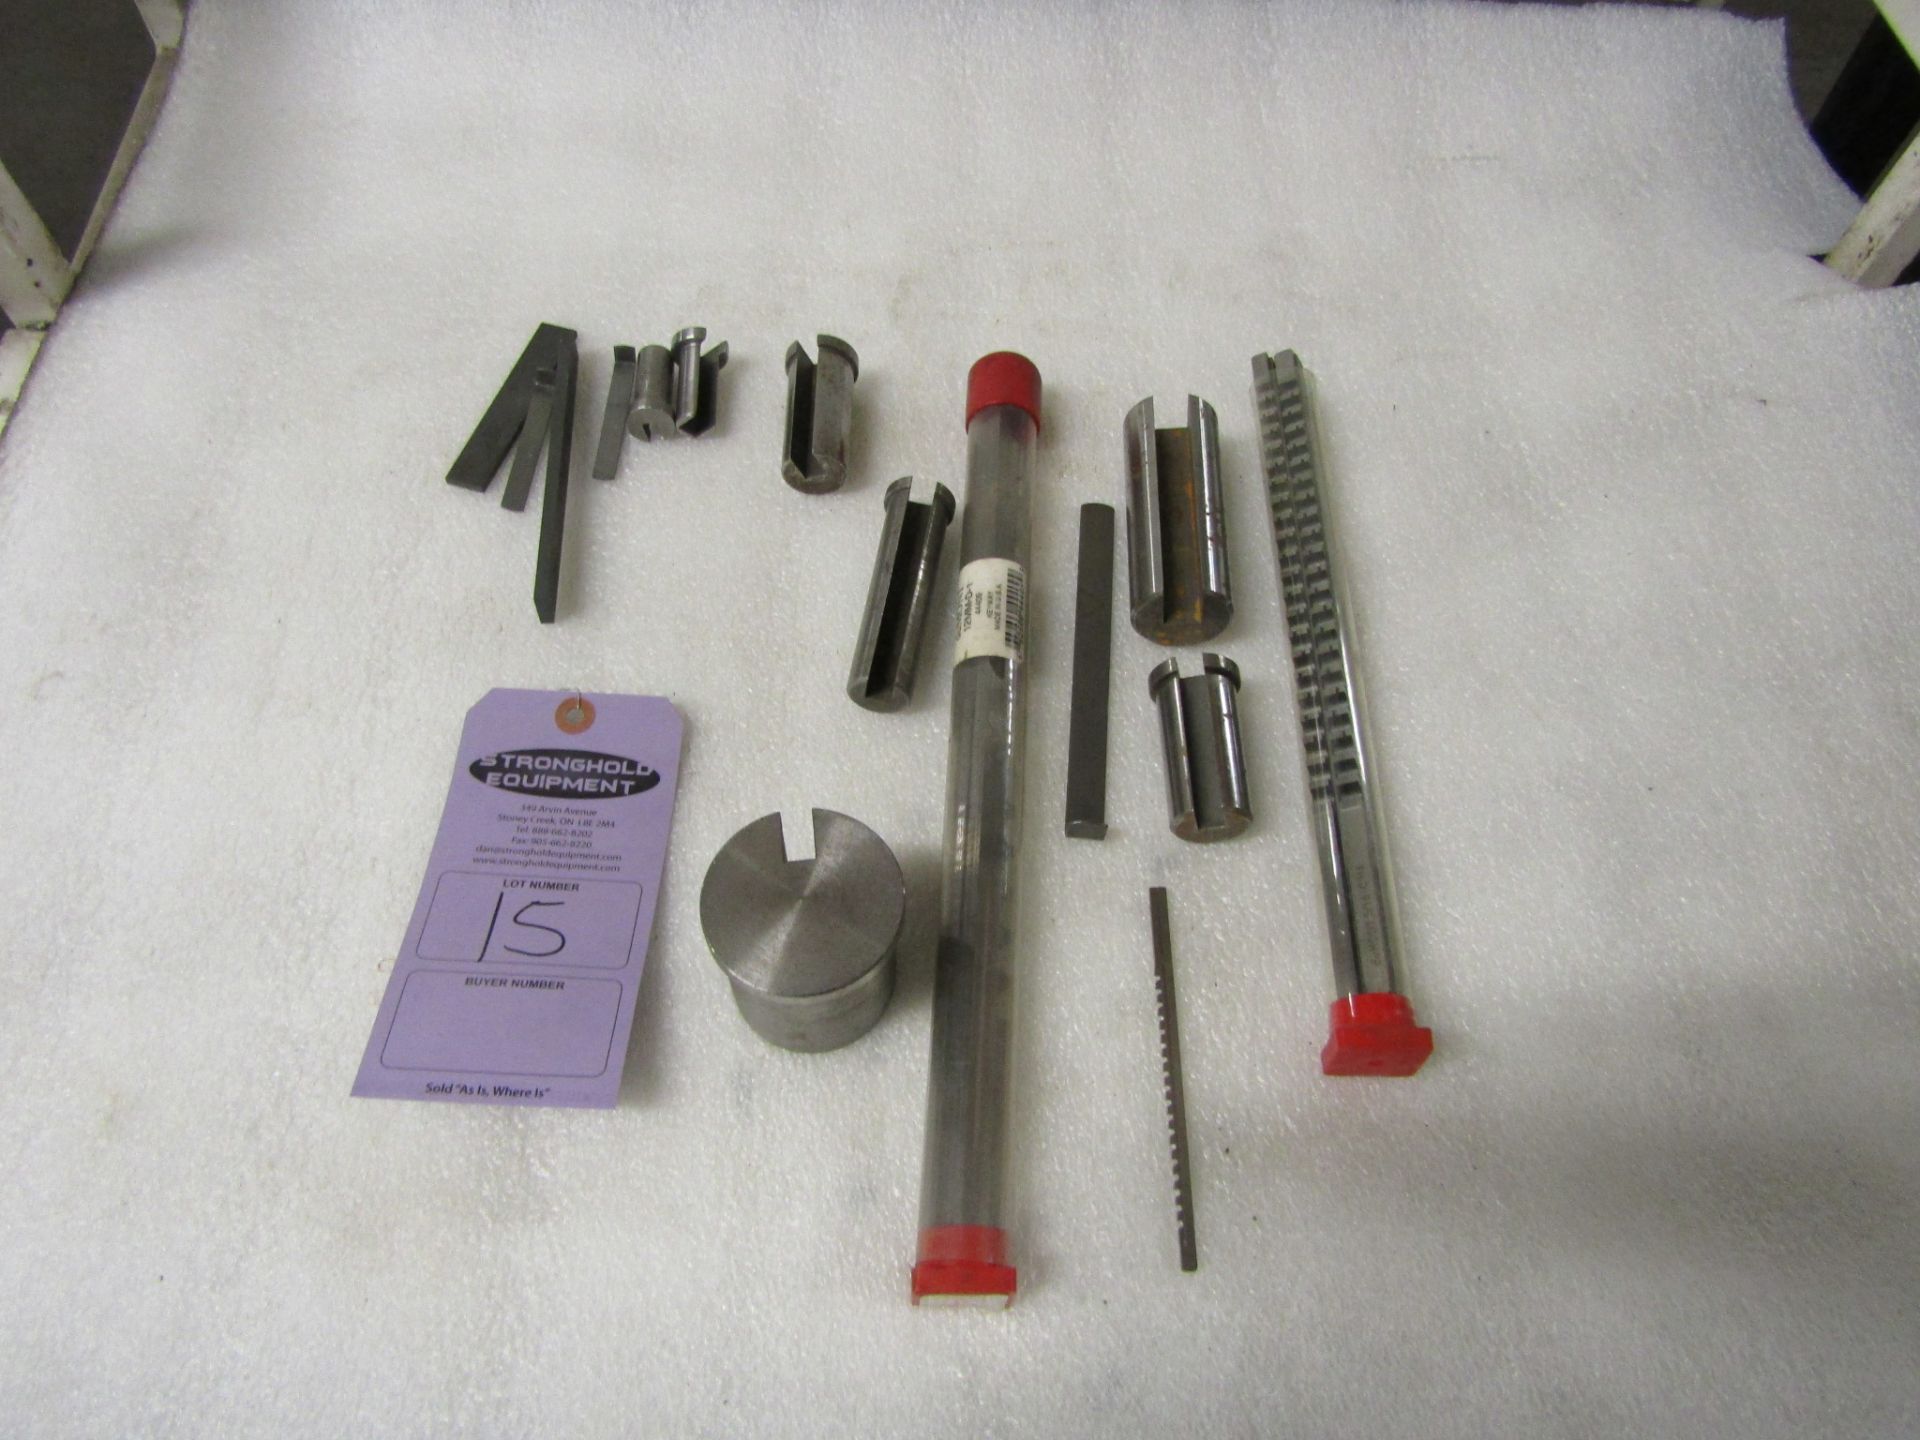 Chamberlain Taper Shank Tool holder with chucks set in case